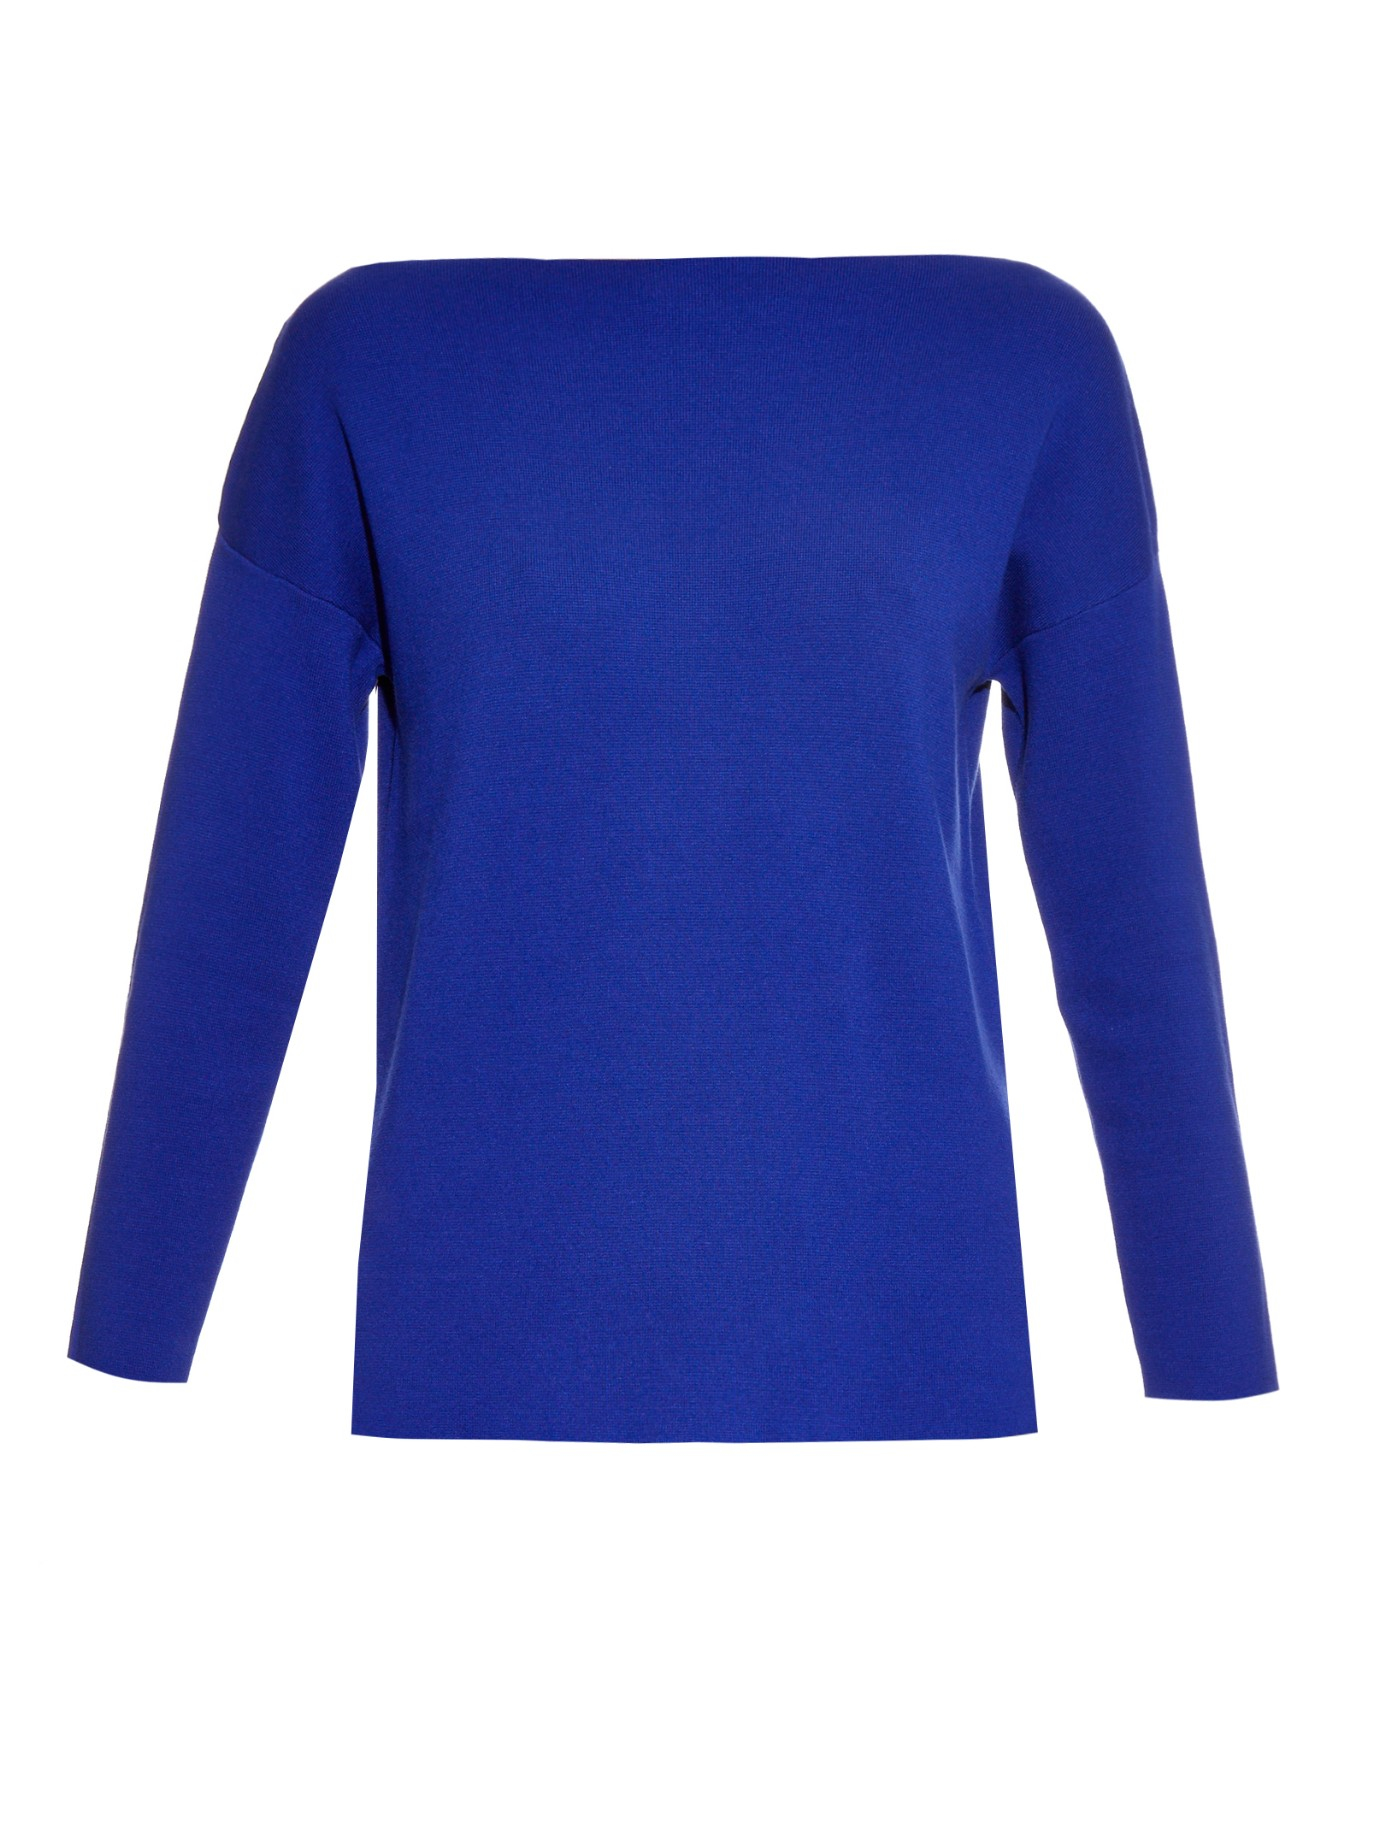 lyst - weekend by maxmara rumena sweater in blue